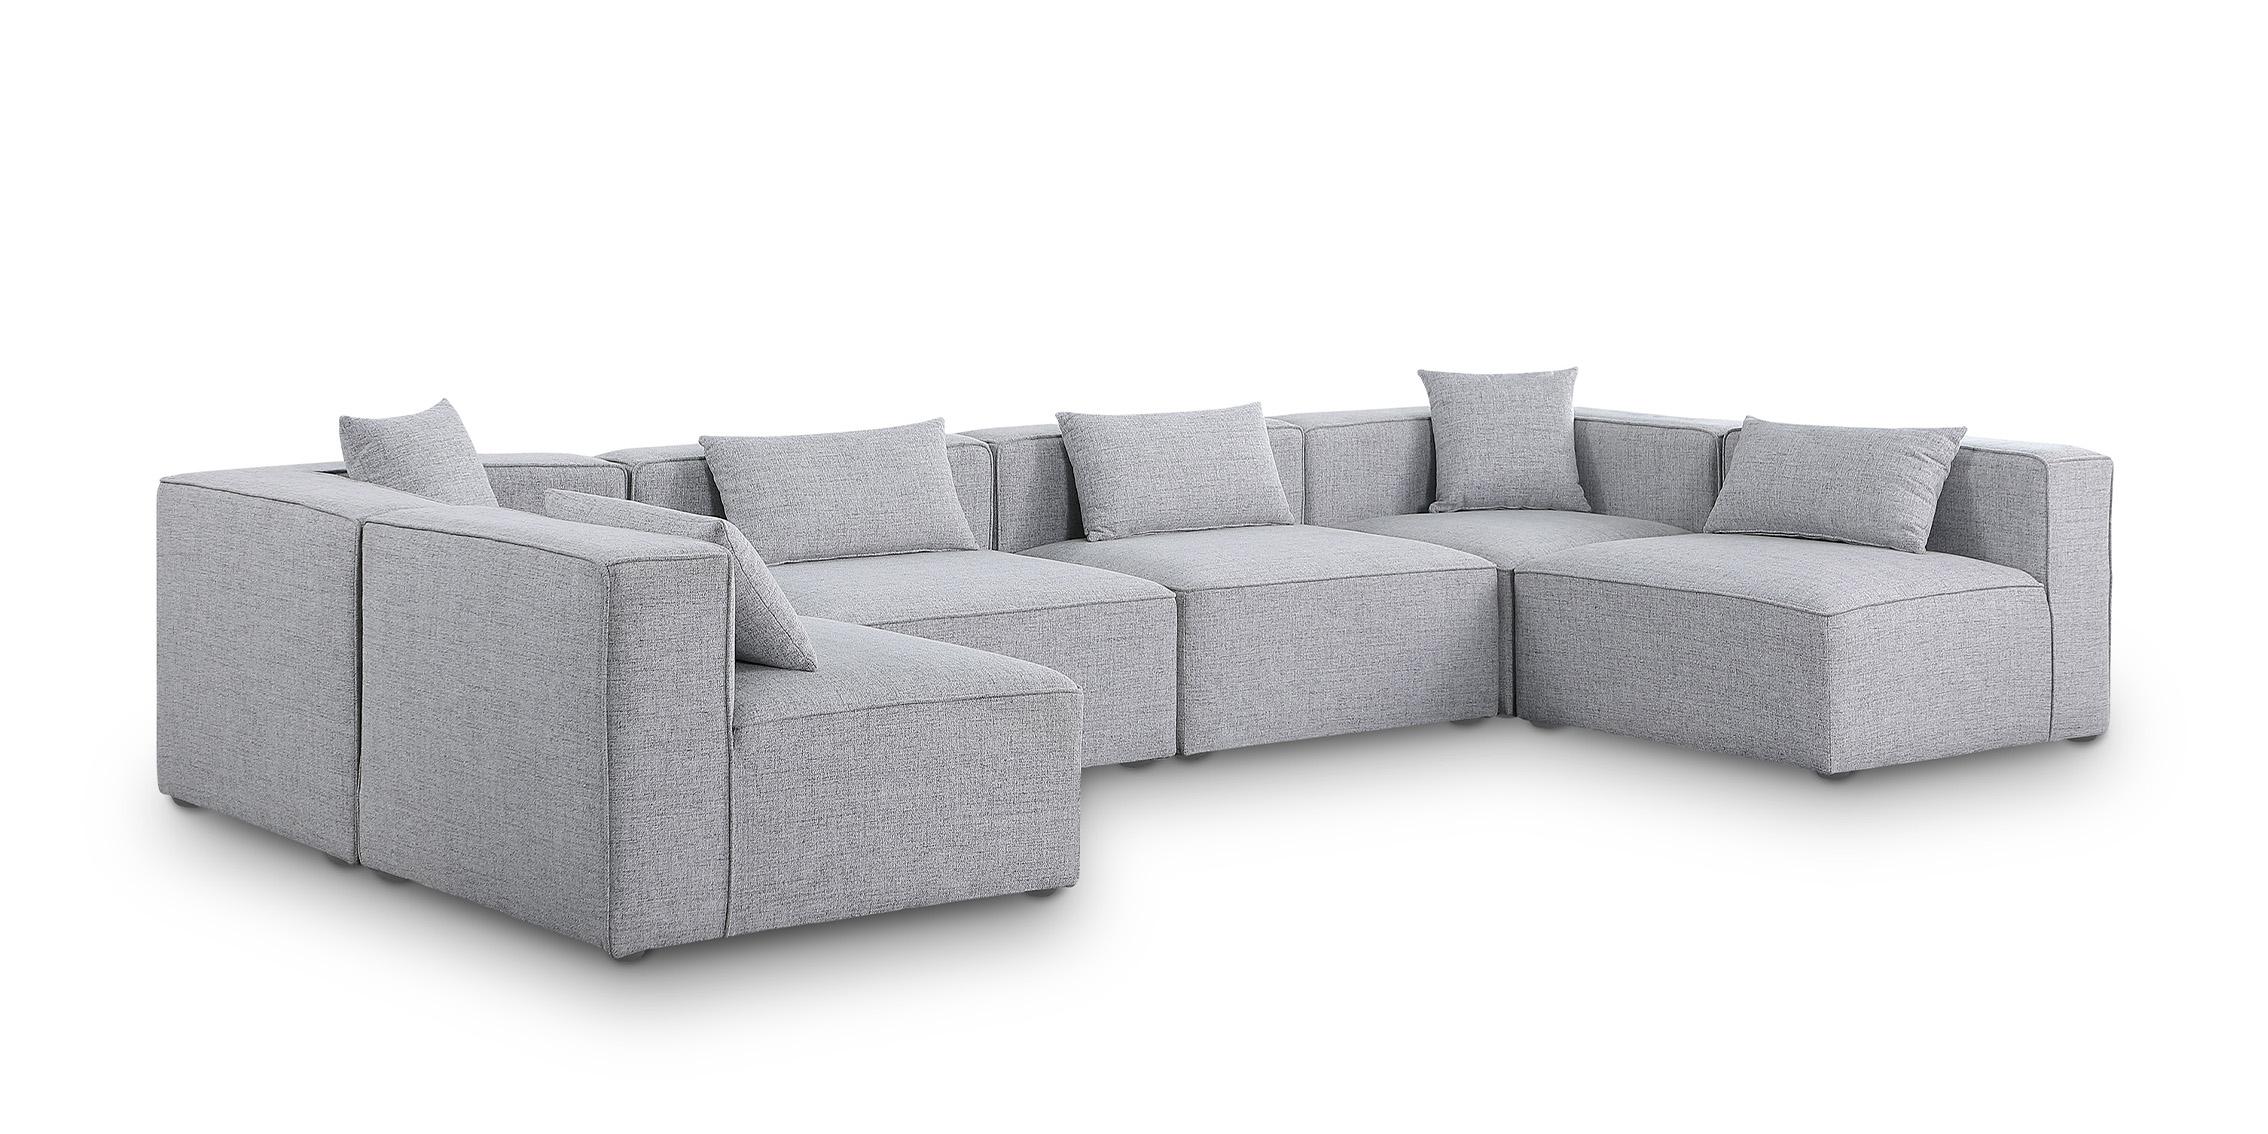 Contemporary, Modern Modular Sectional Sofa CUBE 630Grey-Sec6D 630Grey-Sec6D in Gray Linen